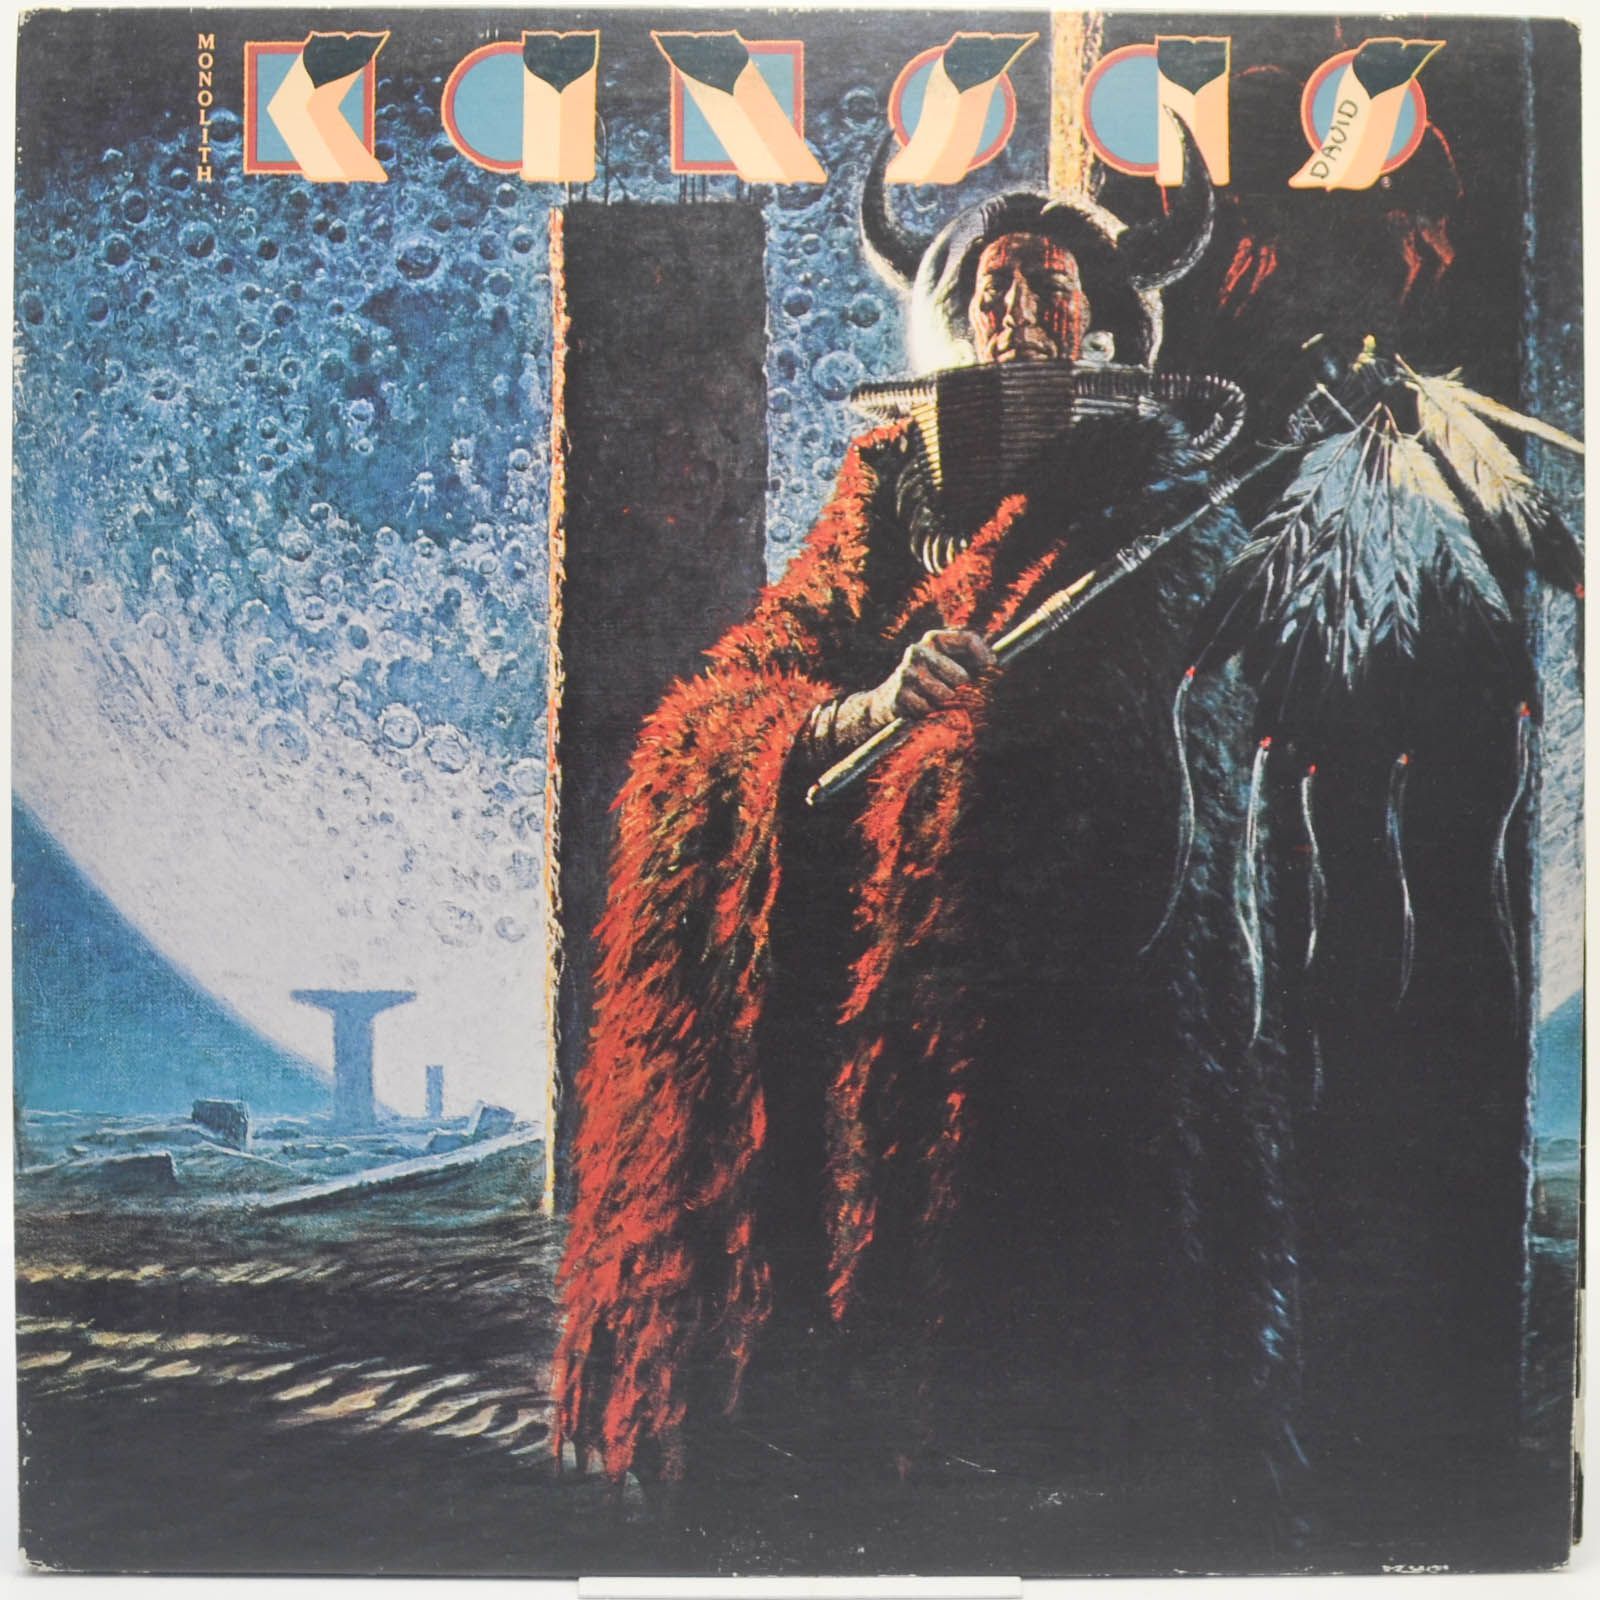 Kansas — Monolith, 1979